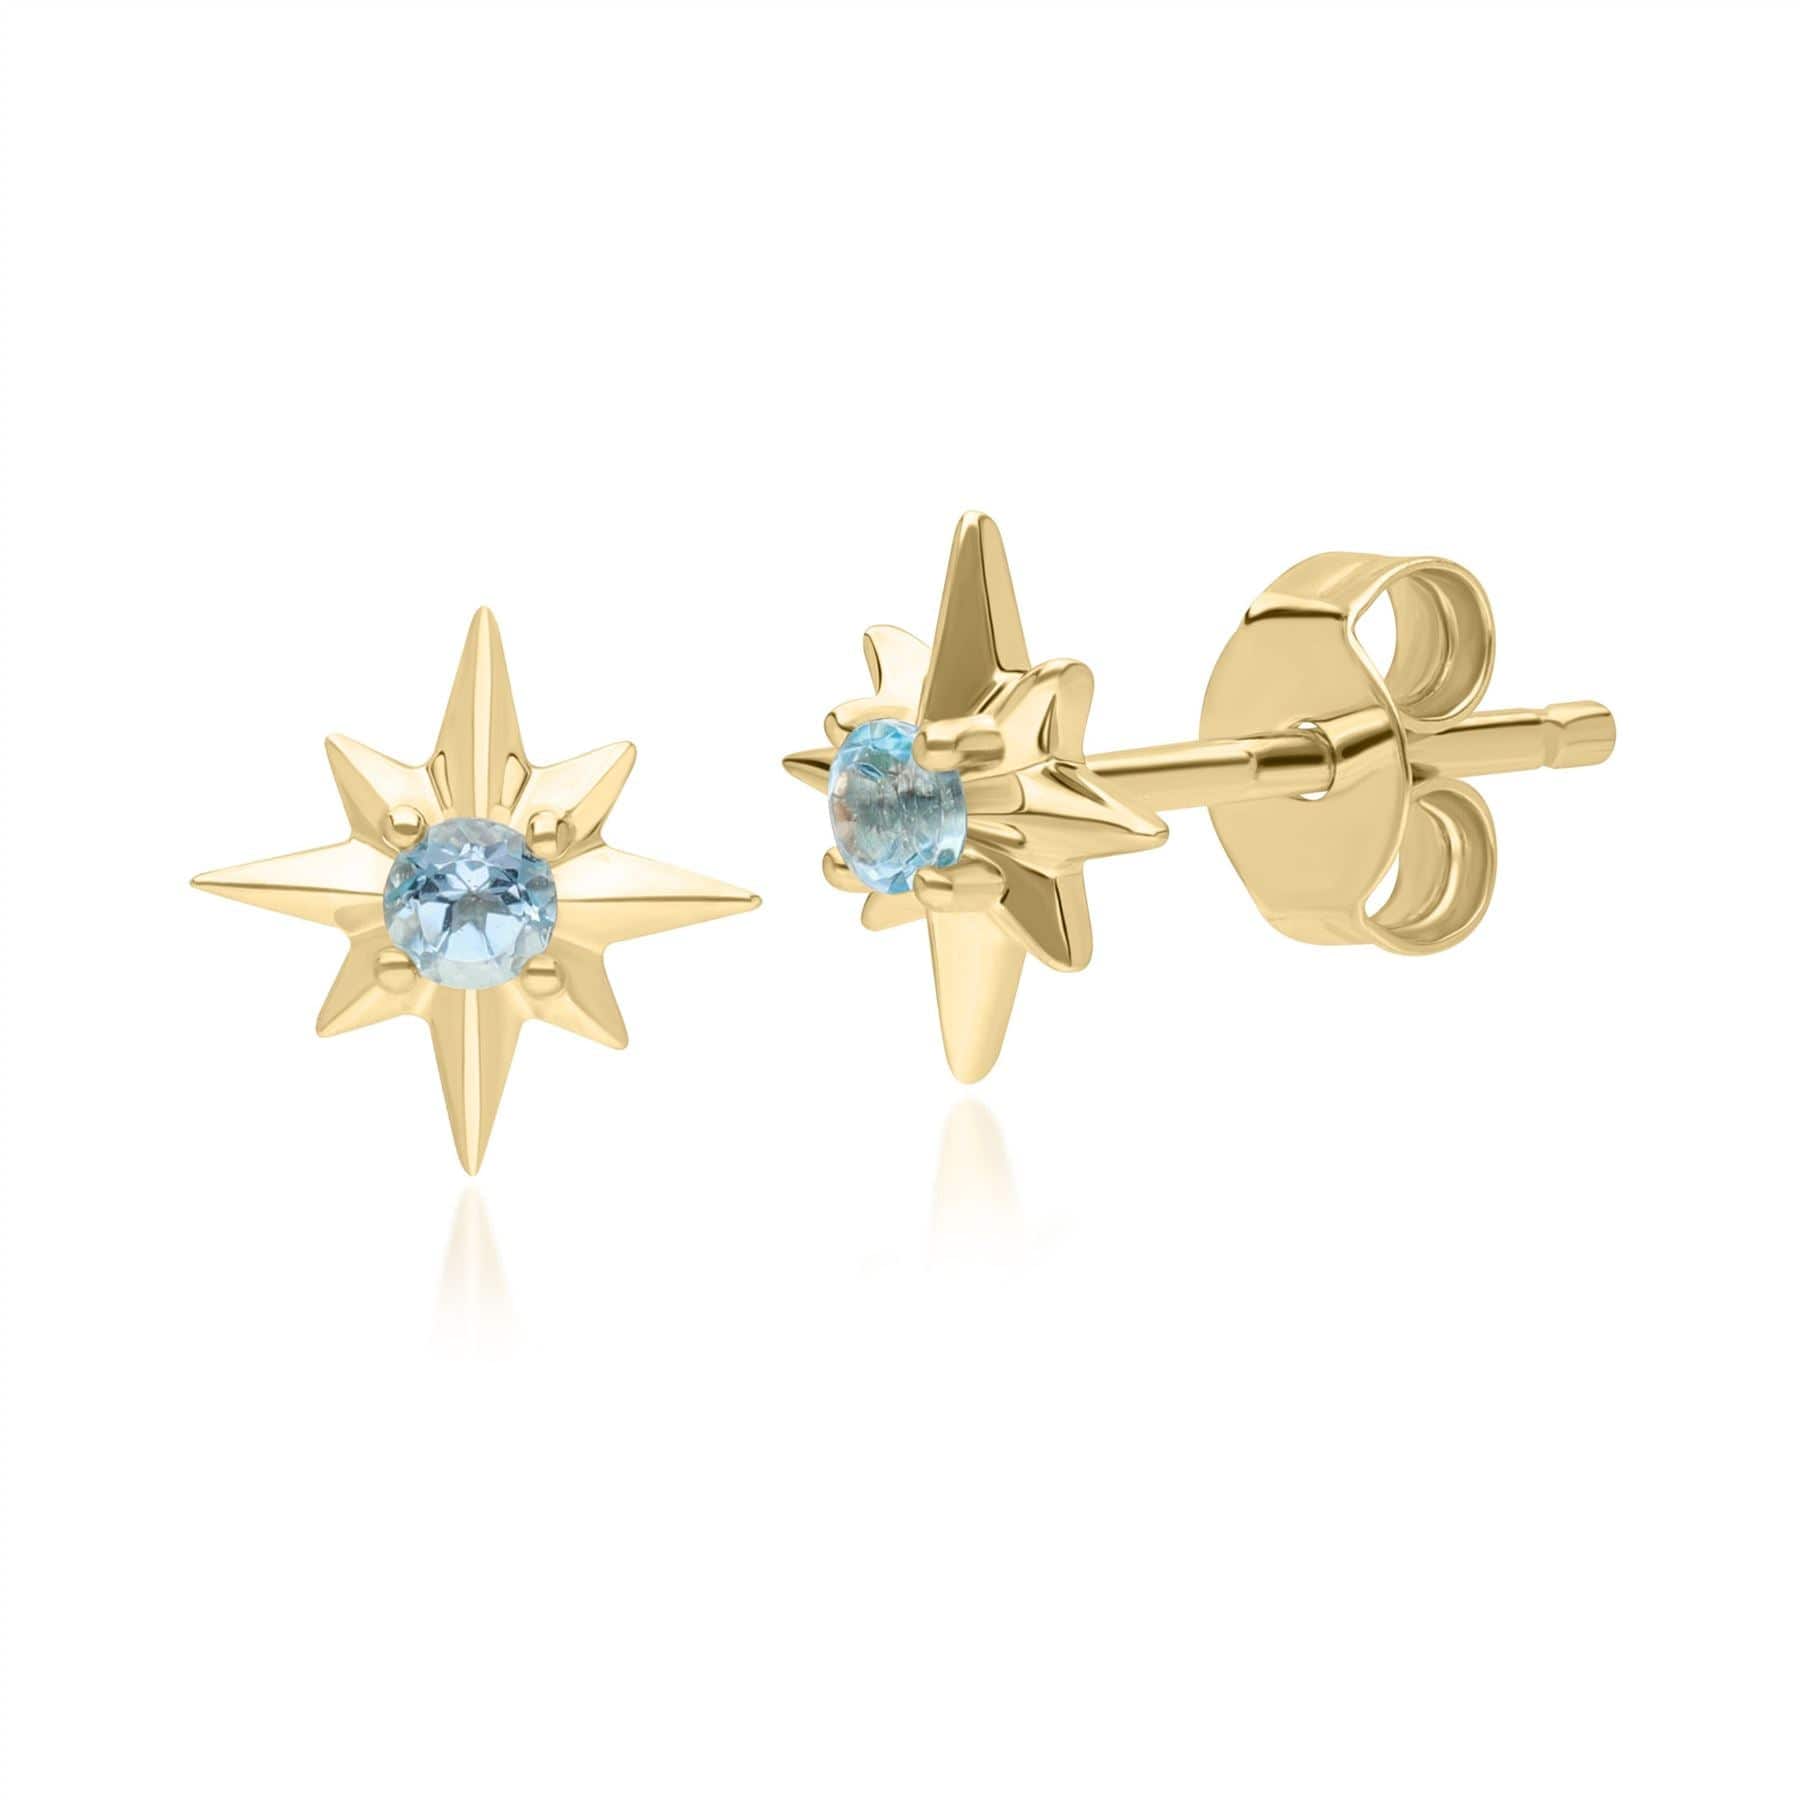 Night Sky Light Swiss Blue Topaz Cabochon Star Stud Earrings in 9ct Yellow Gold - Gemondo